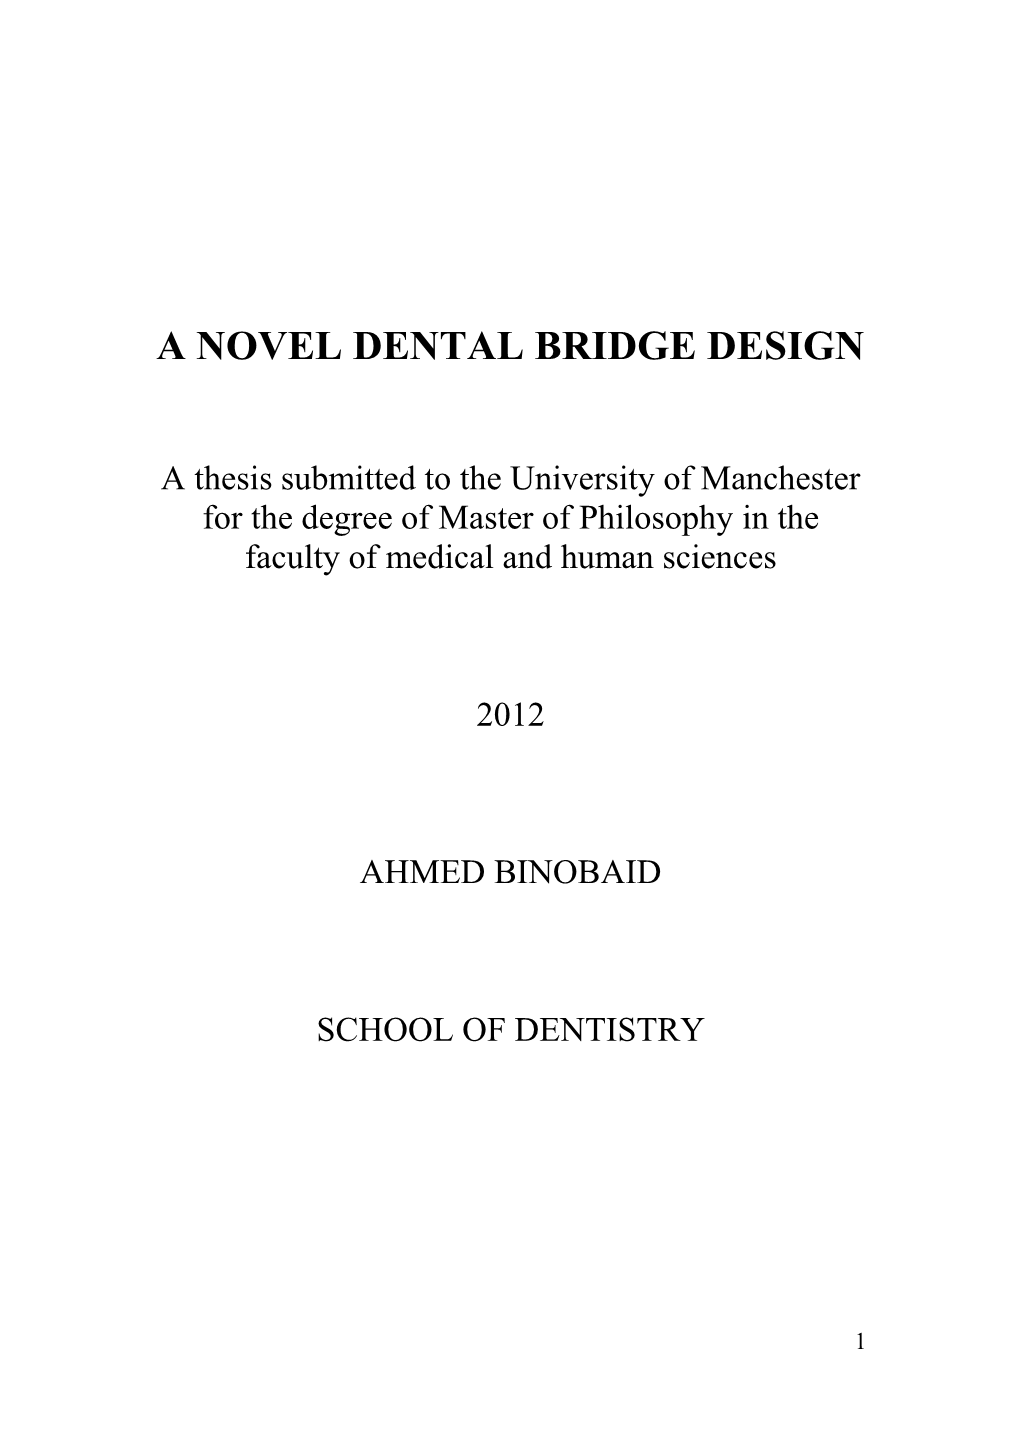 A Novel Dental Bridge Design